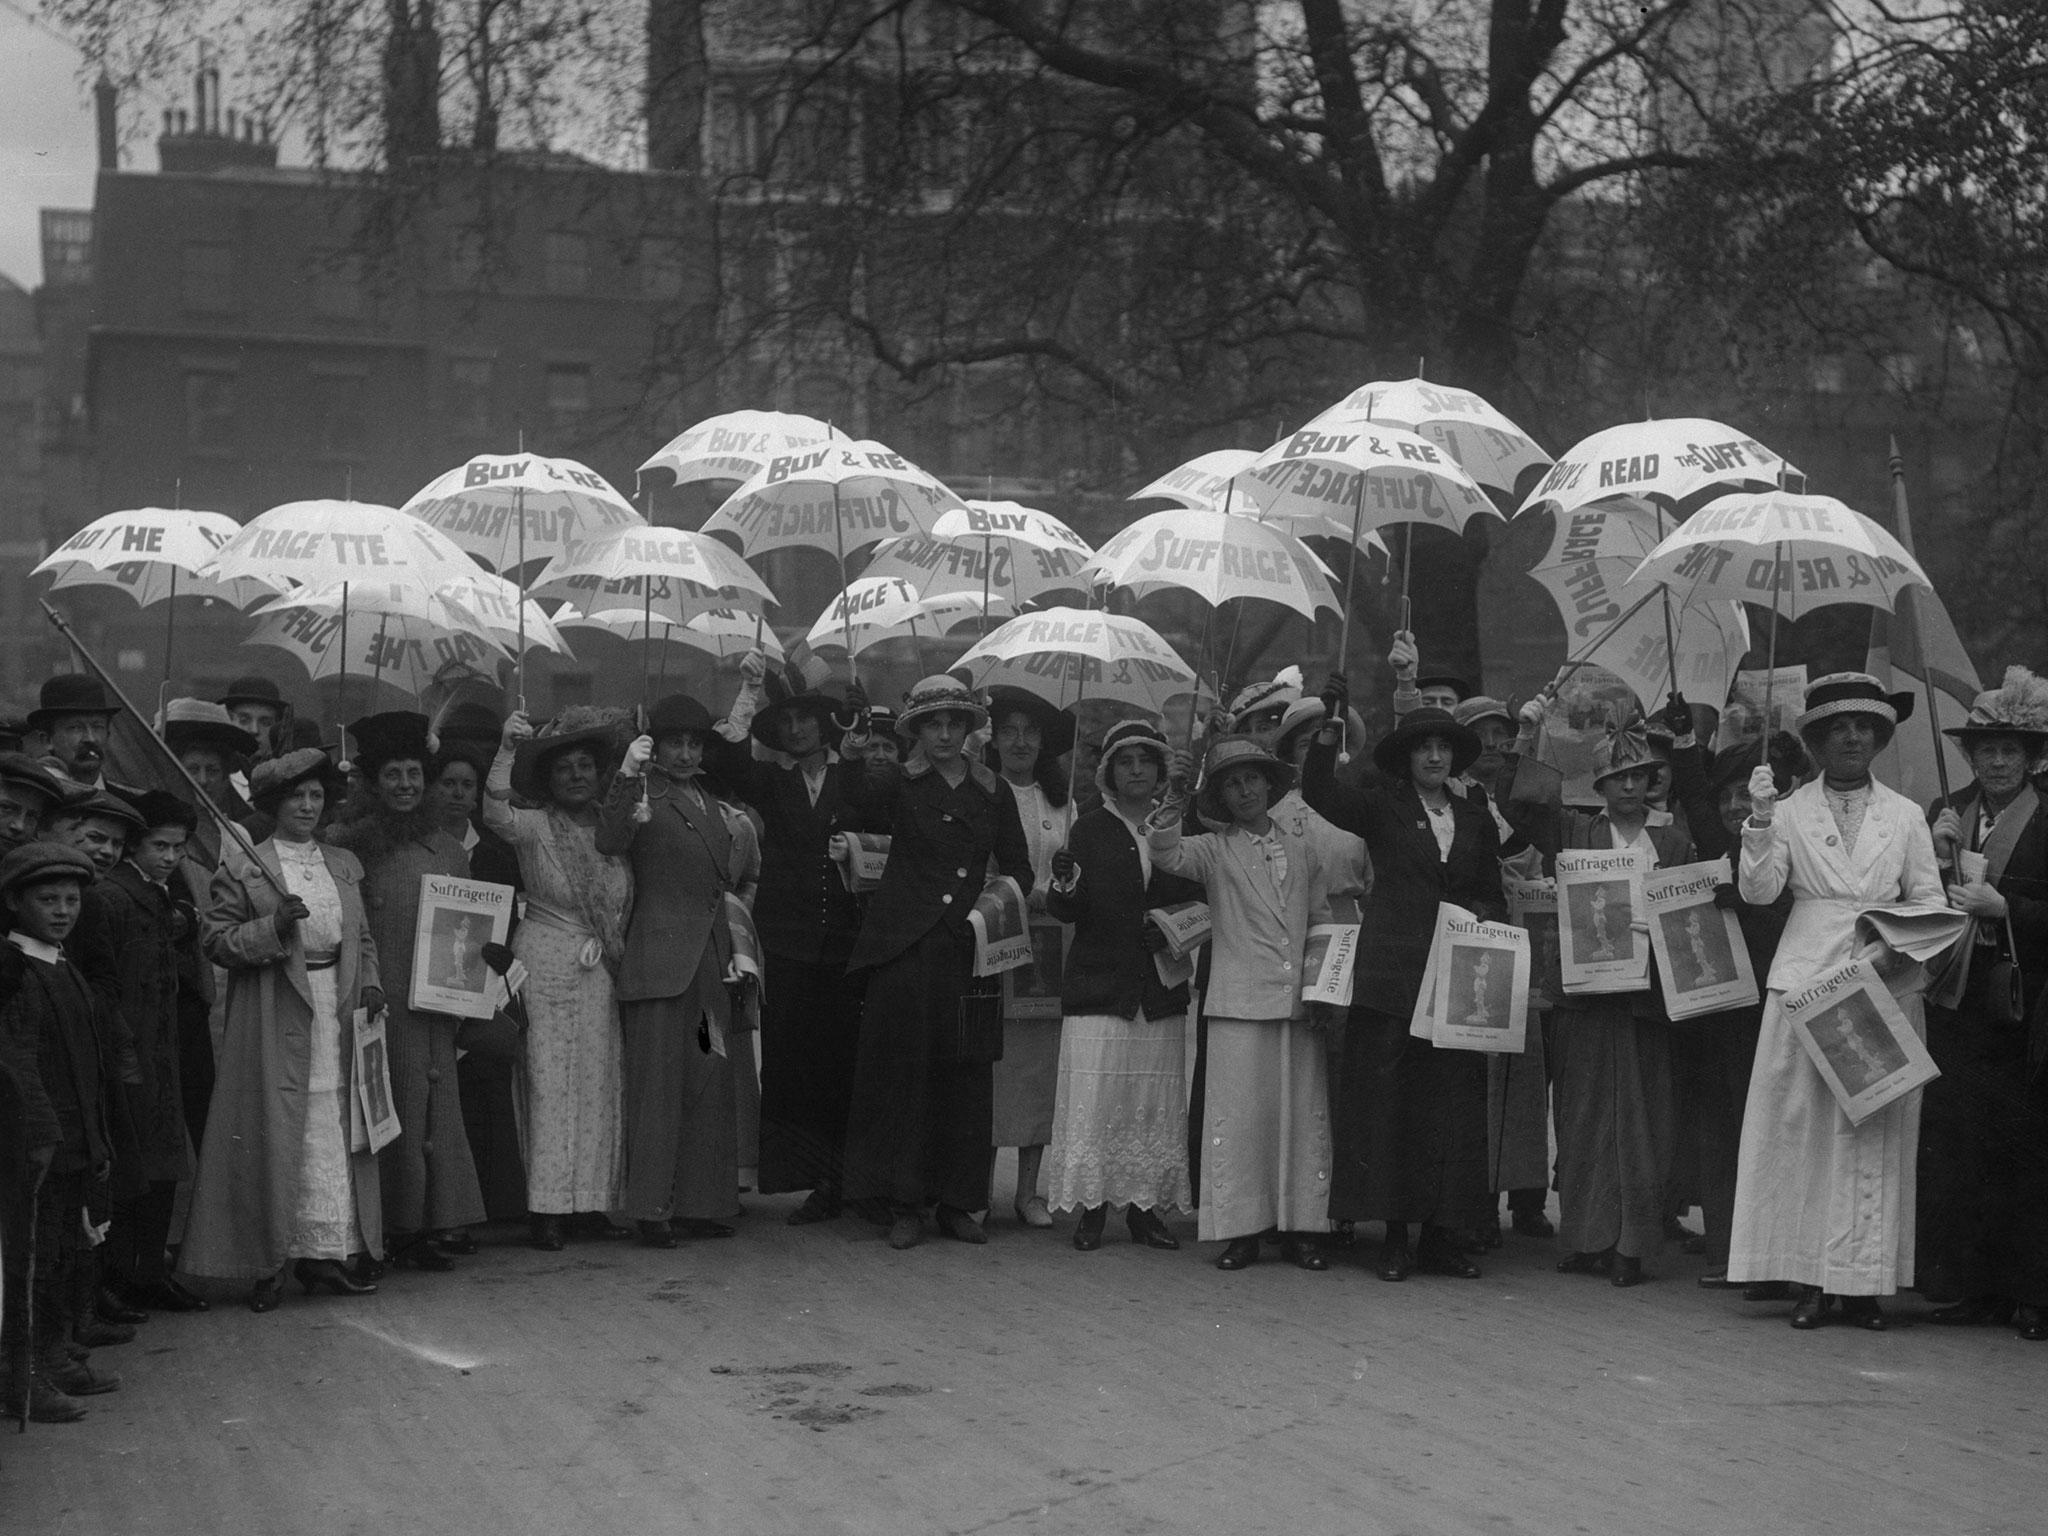 Suffragettes holding white sunshades advertising their newspaper 'Suffragette' in 1914.